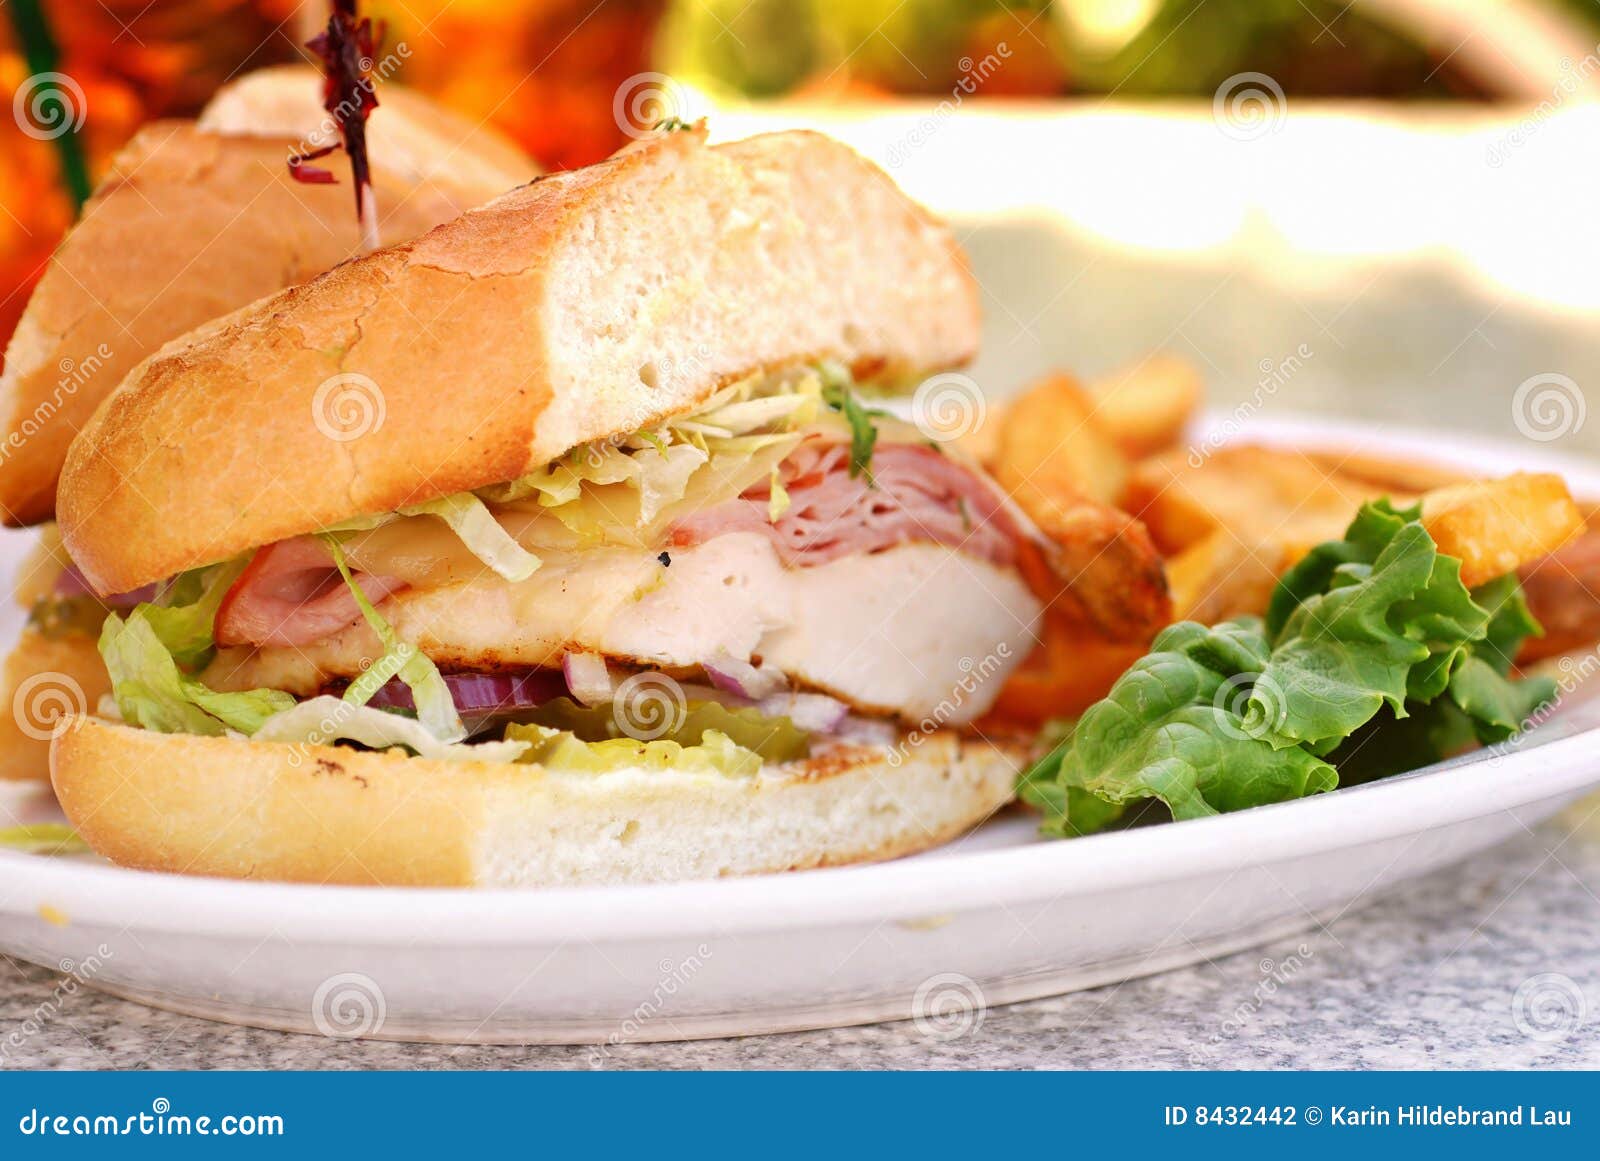 chicken cordon bleu sandwich